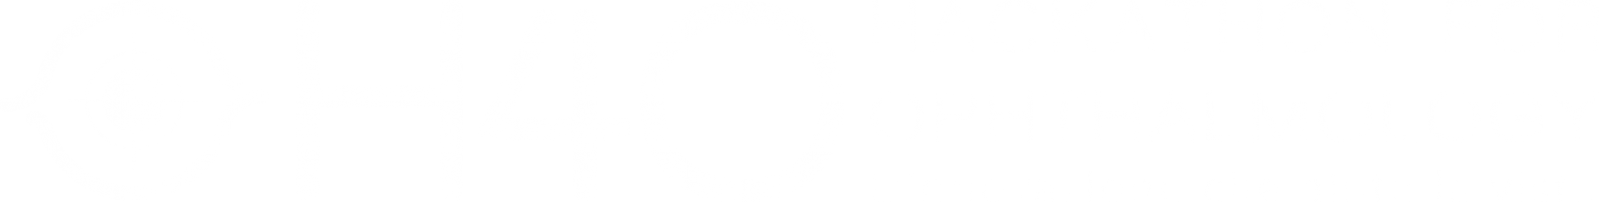 H4O - Hackathon for ophthalmology